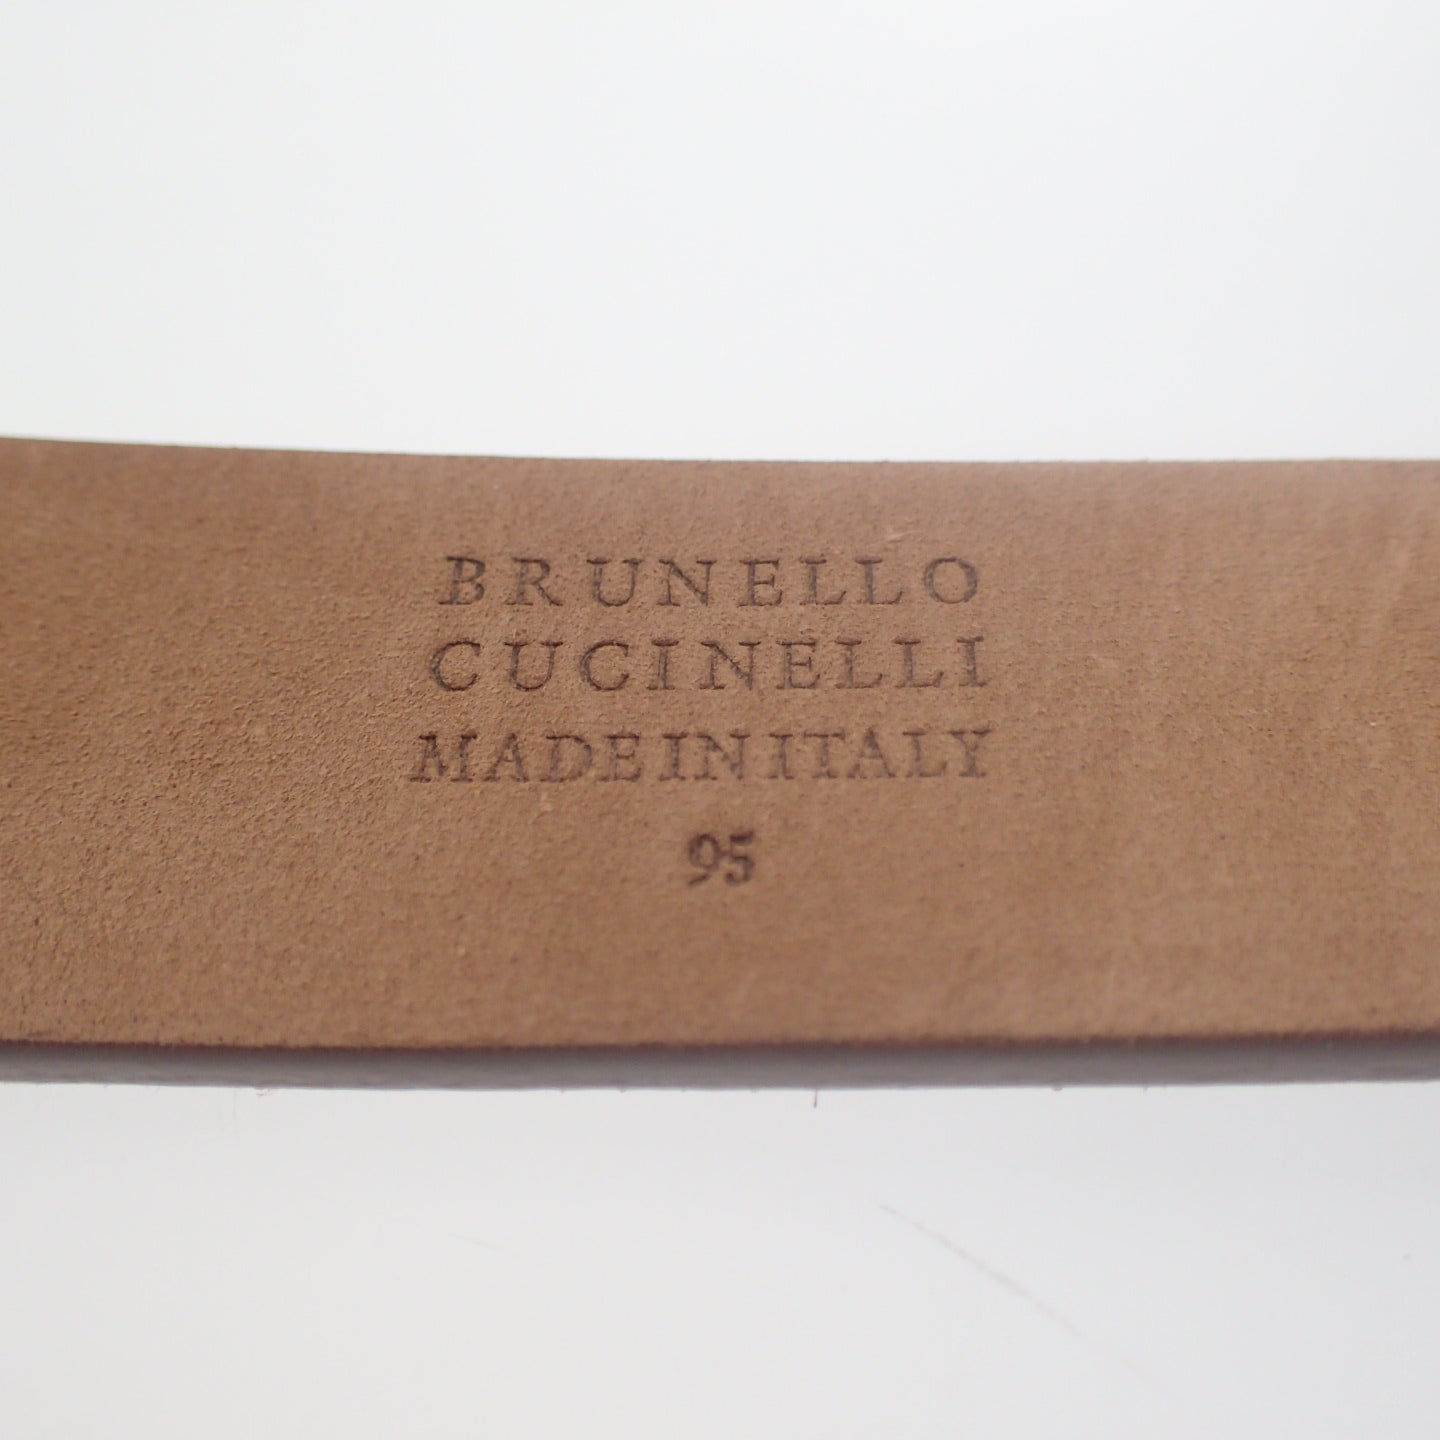 Brunello Cucinelli 皮革腰带 绒面革 尺寸 95 BRUNELLO CUCINELLI [AFI18] [二手] 